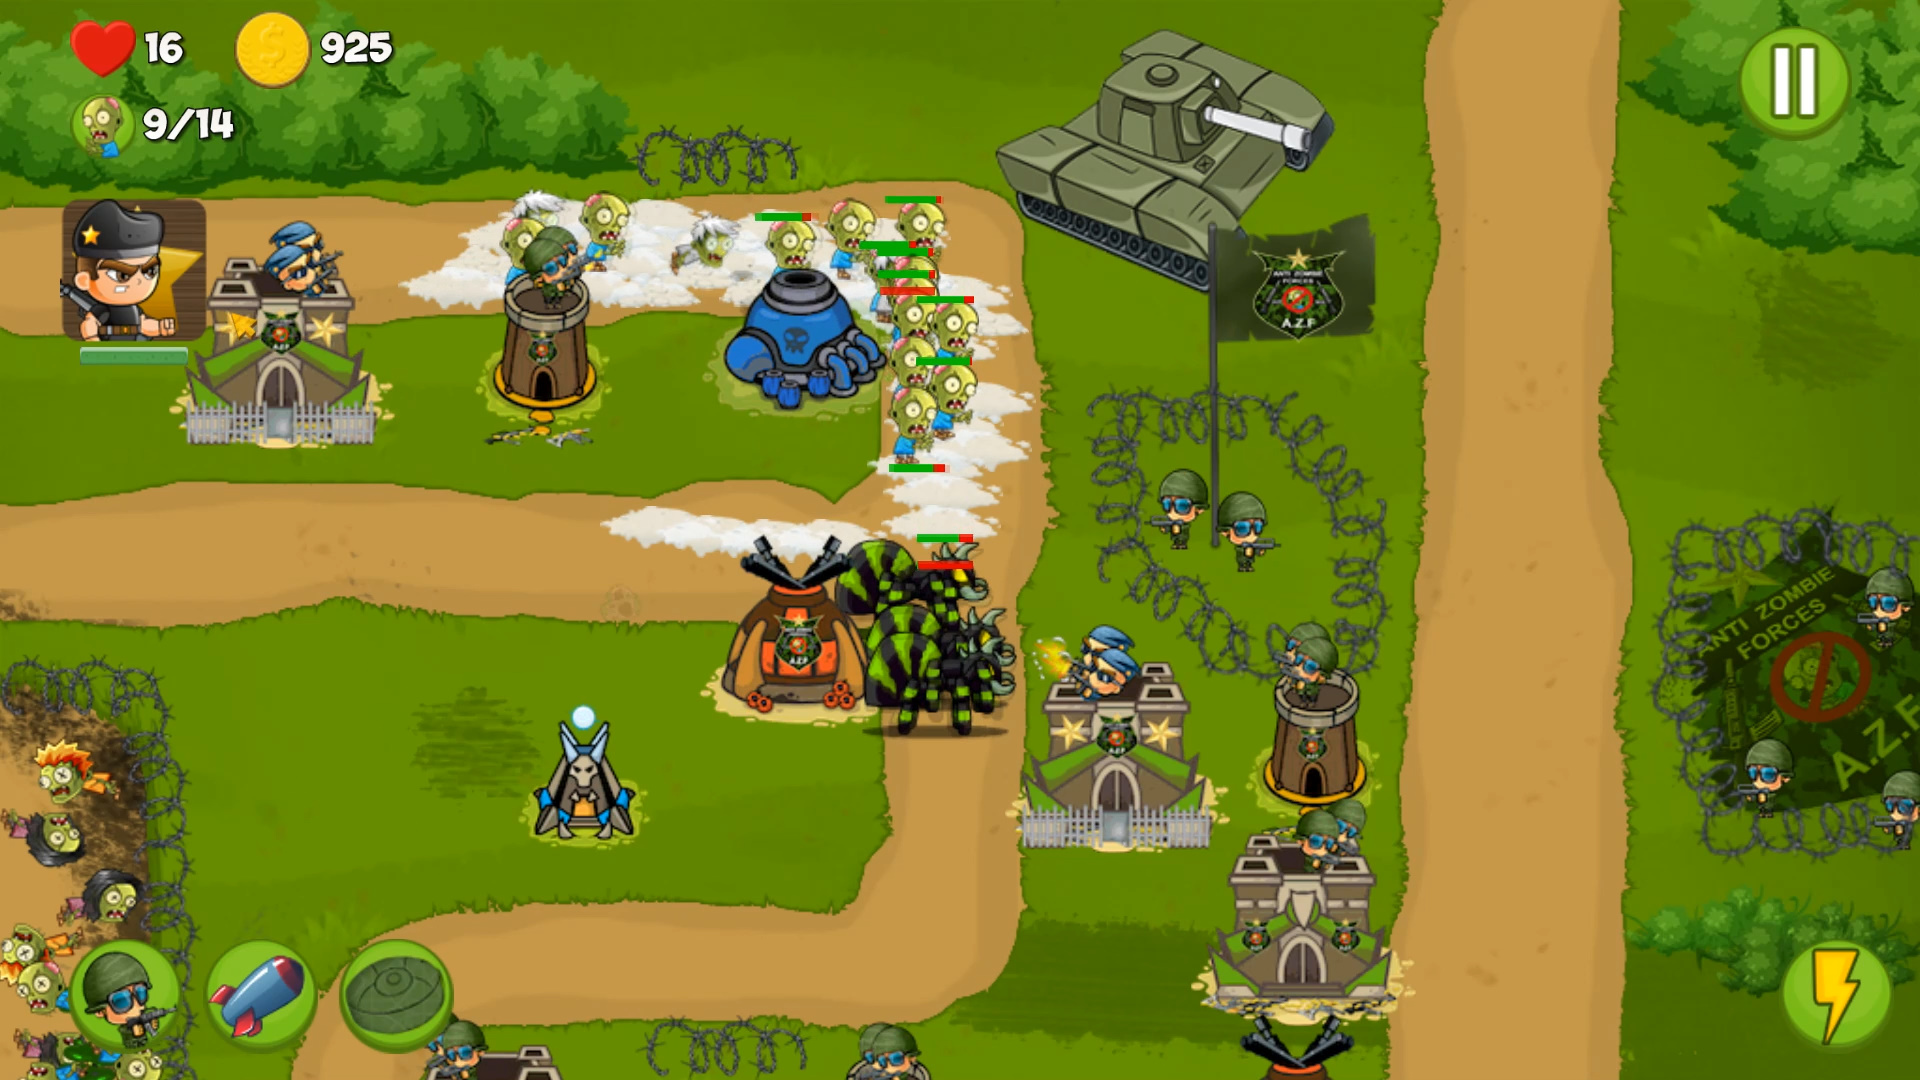 Zombie Wars: Invasion screenshot